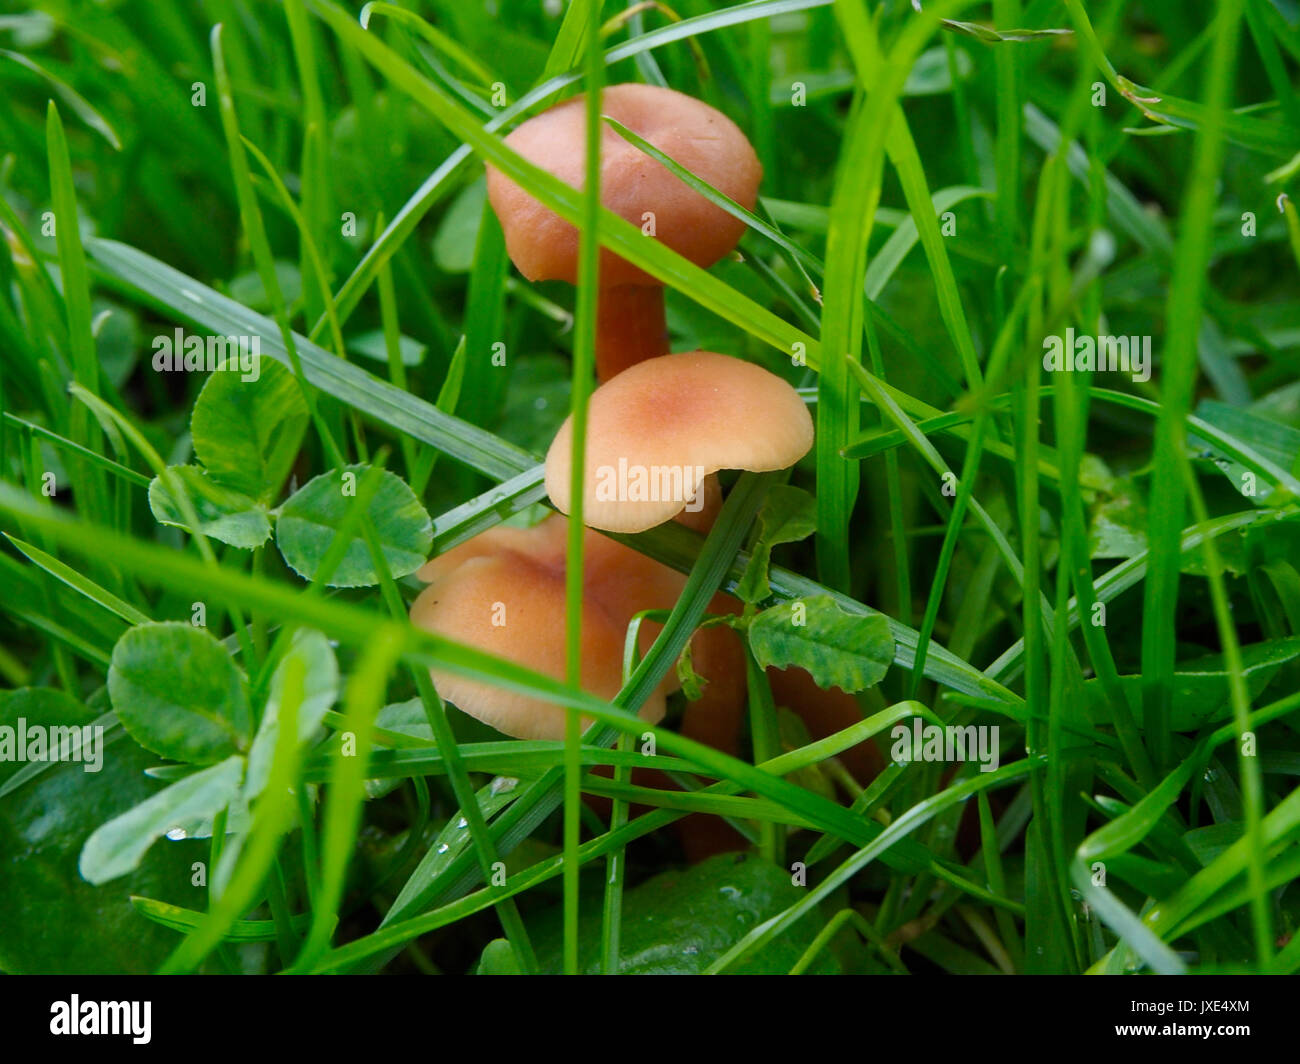 Marasmius oreades mushrooms in the field Stock Photo